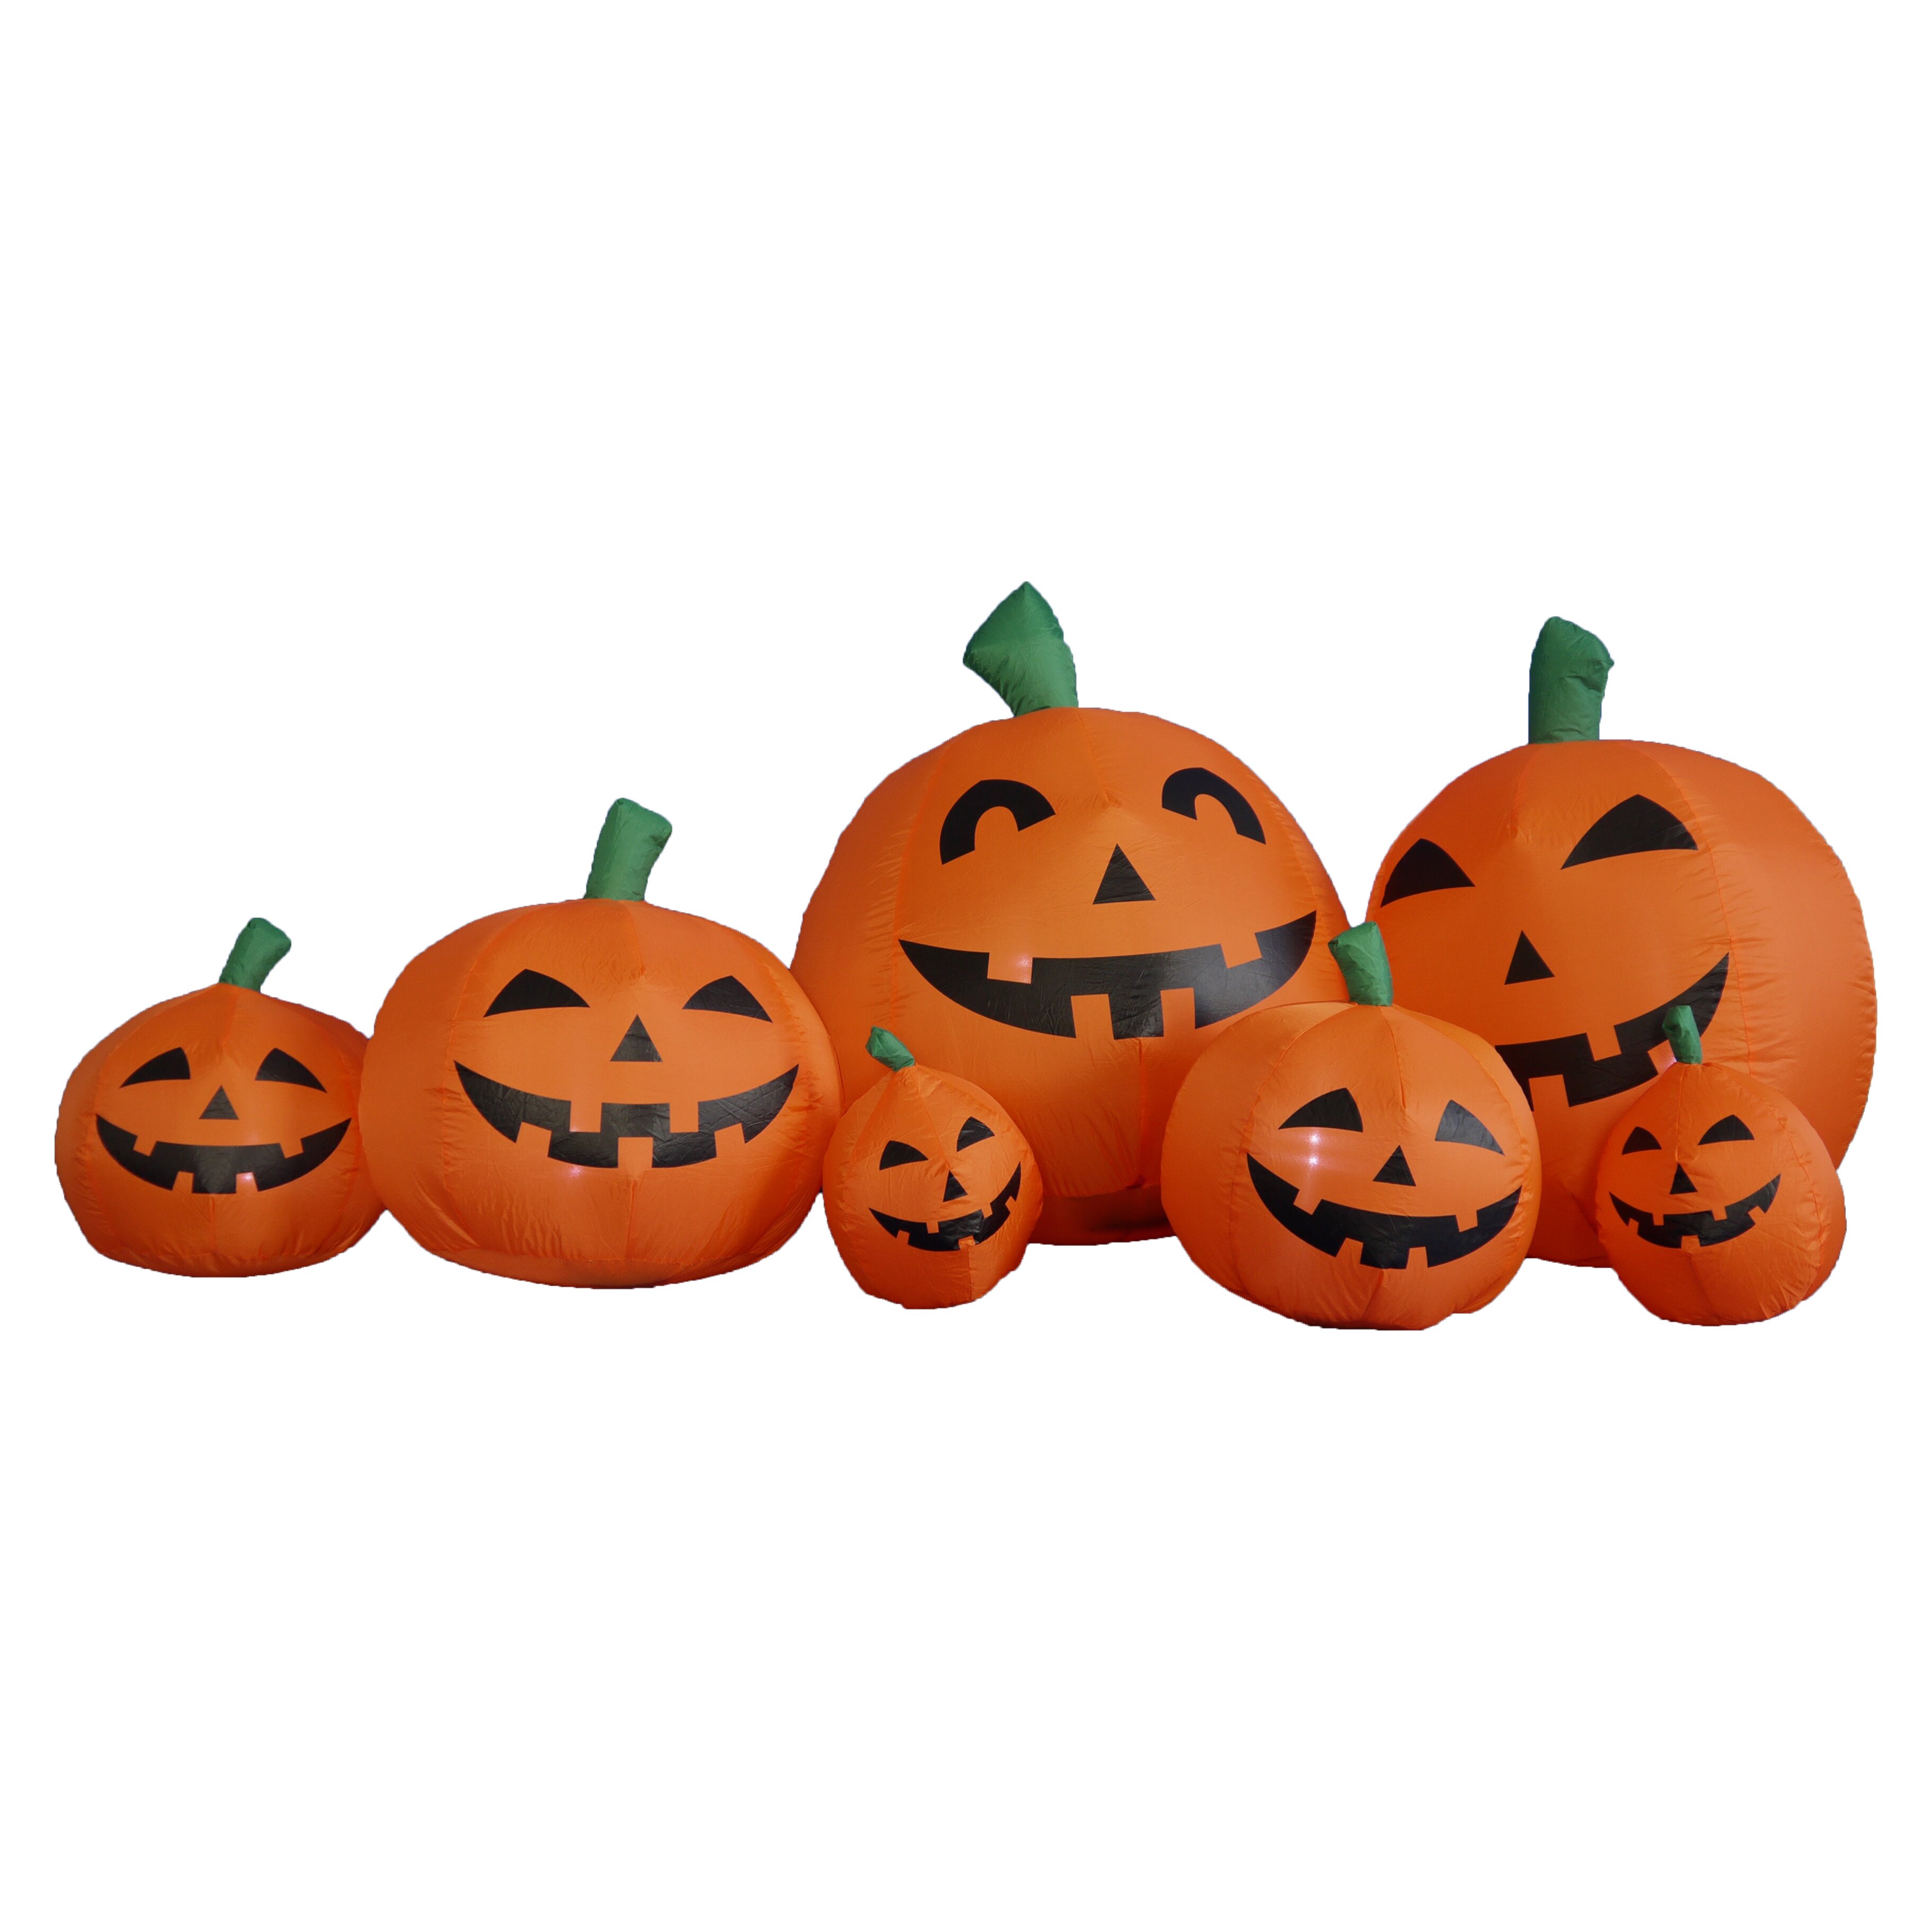 BZB Goods Halloween Inflatable Pumpkins Decoration & Reviews | Wayfair